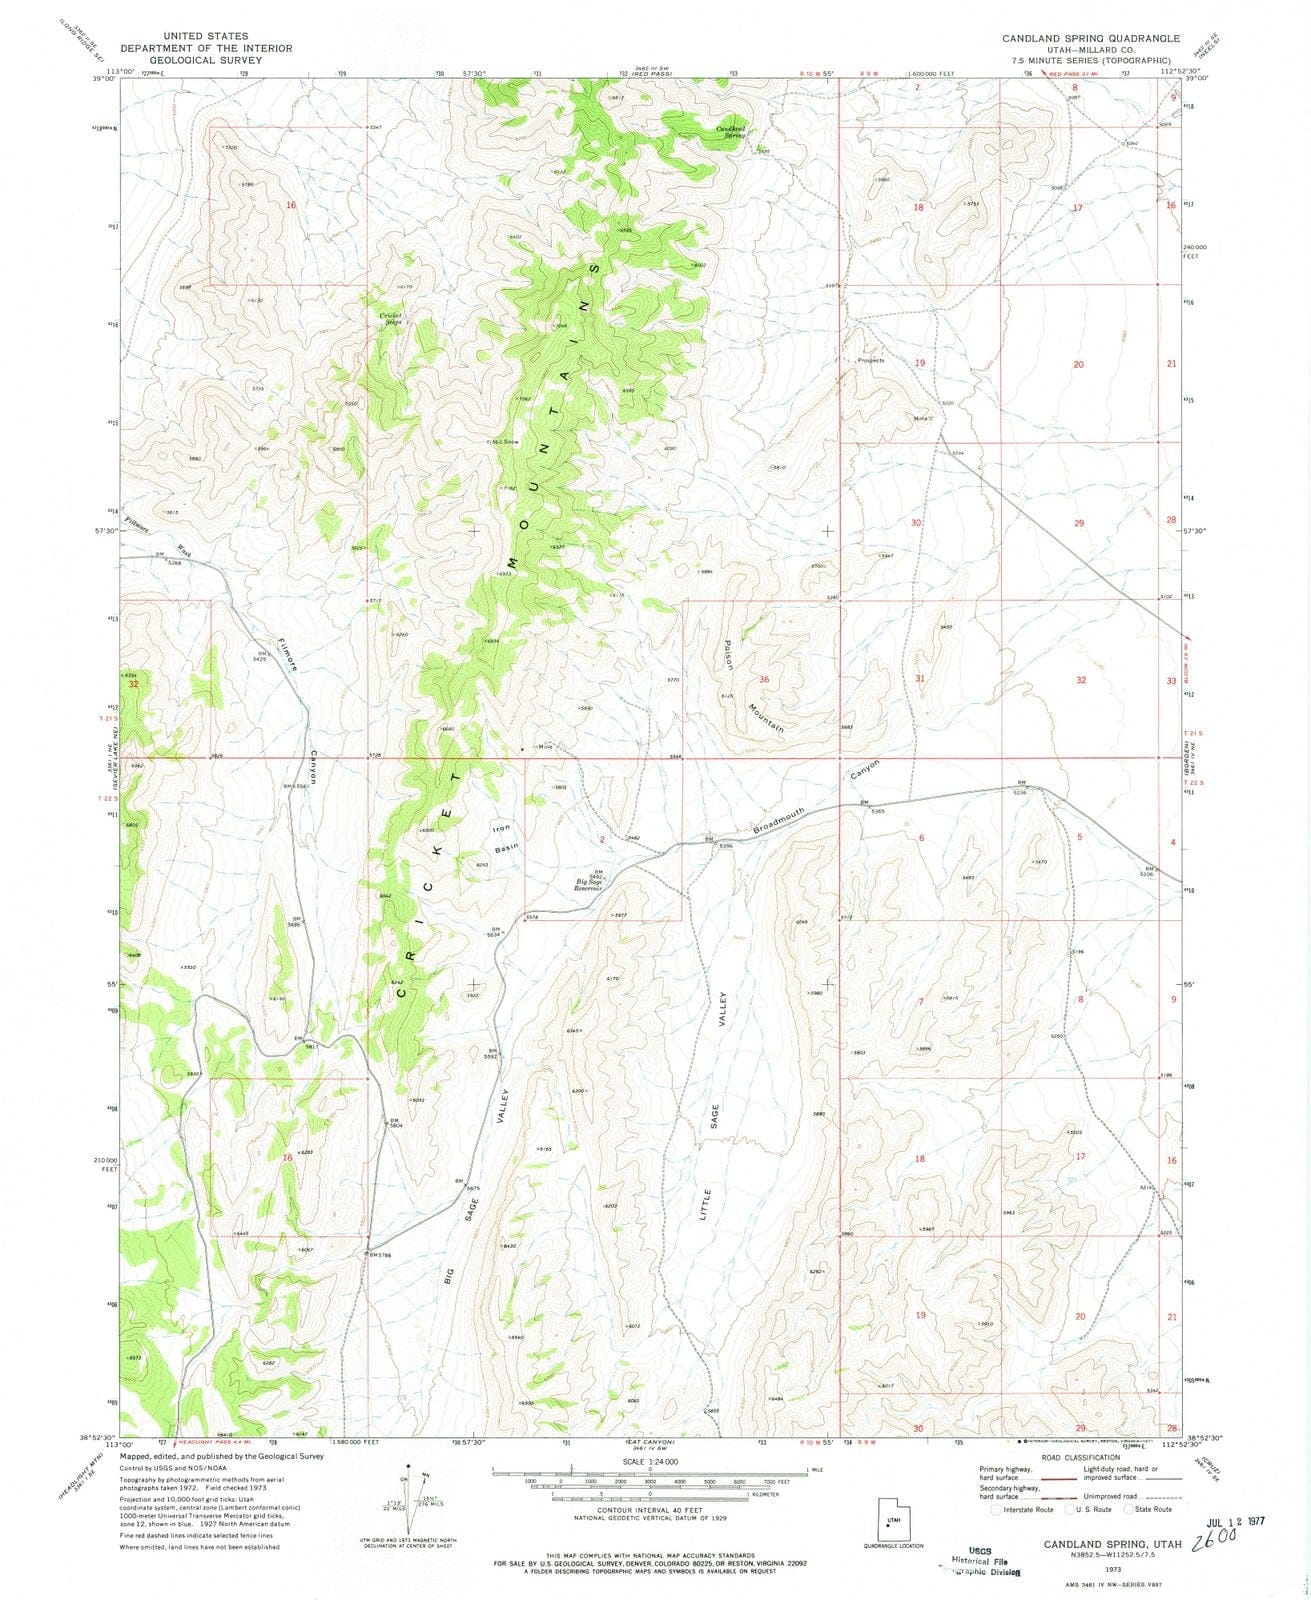 1973 Candland Spring, UT - Utah - USGS Topographic Map